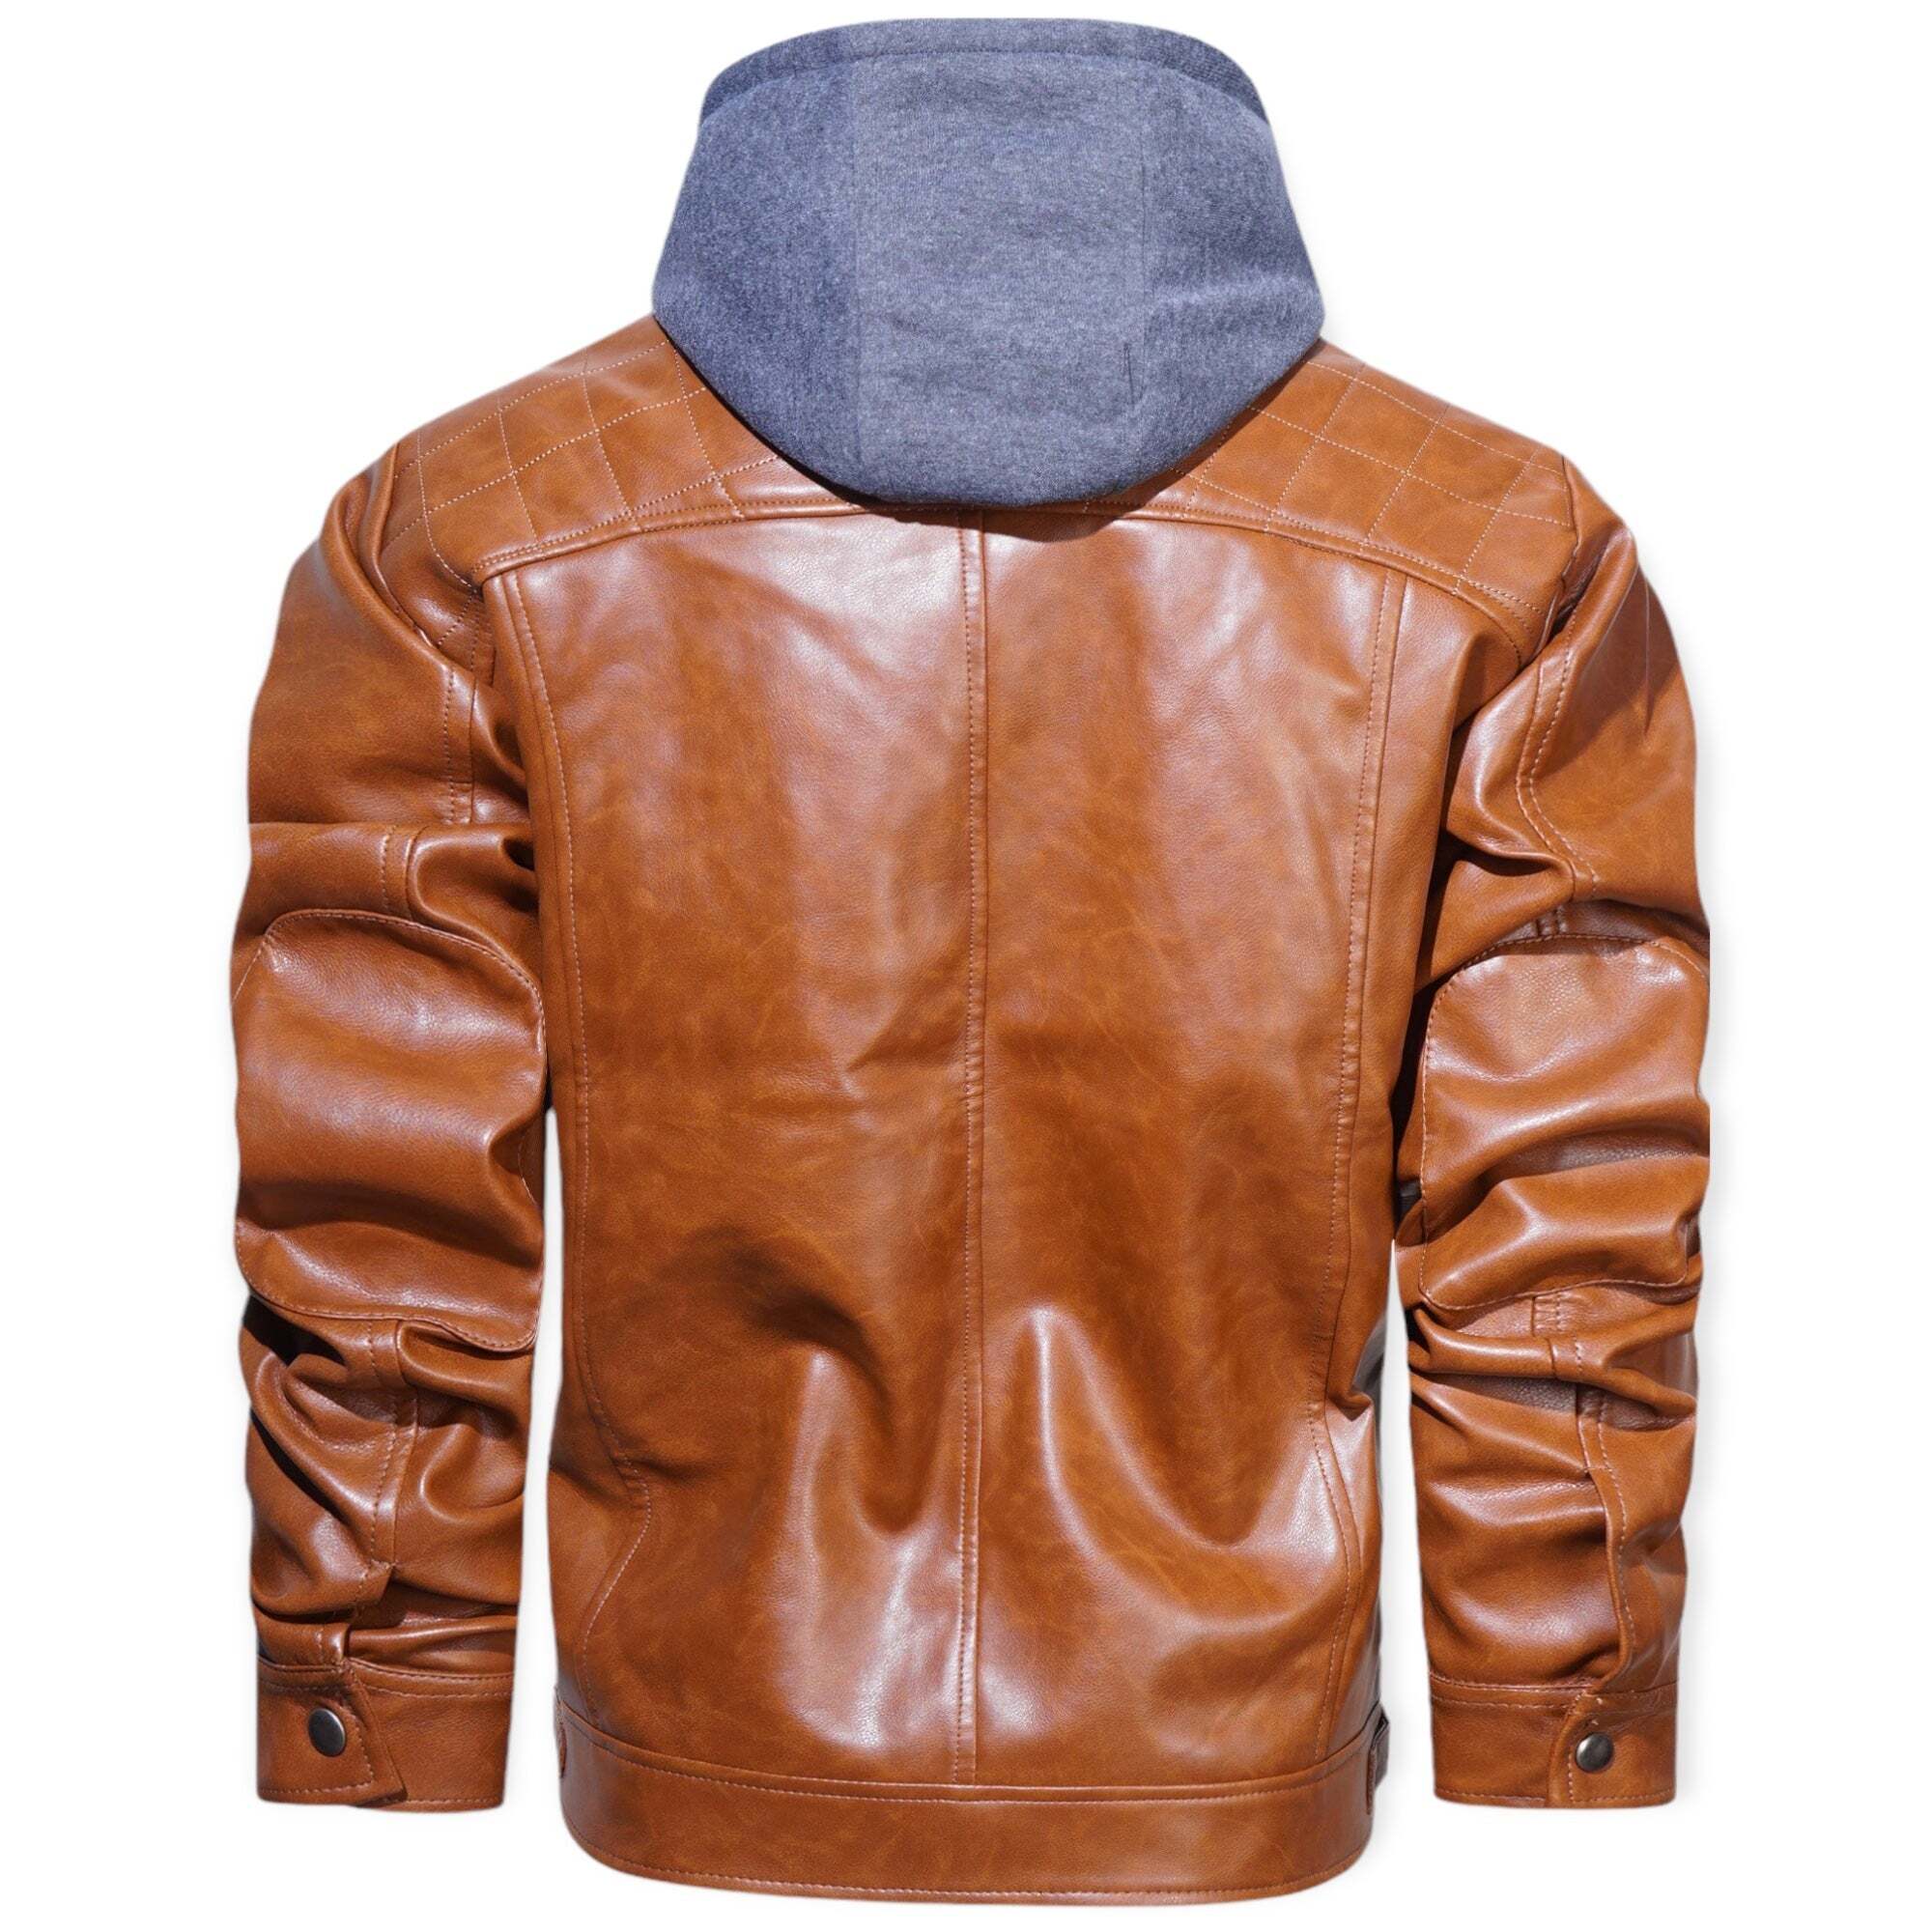 'Sprinter' Leather Jacket